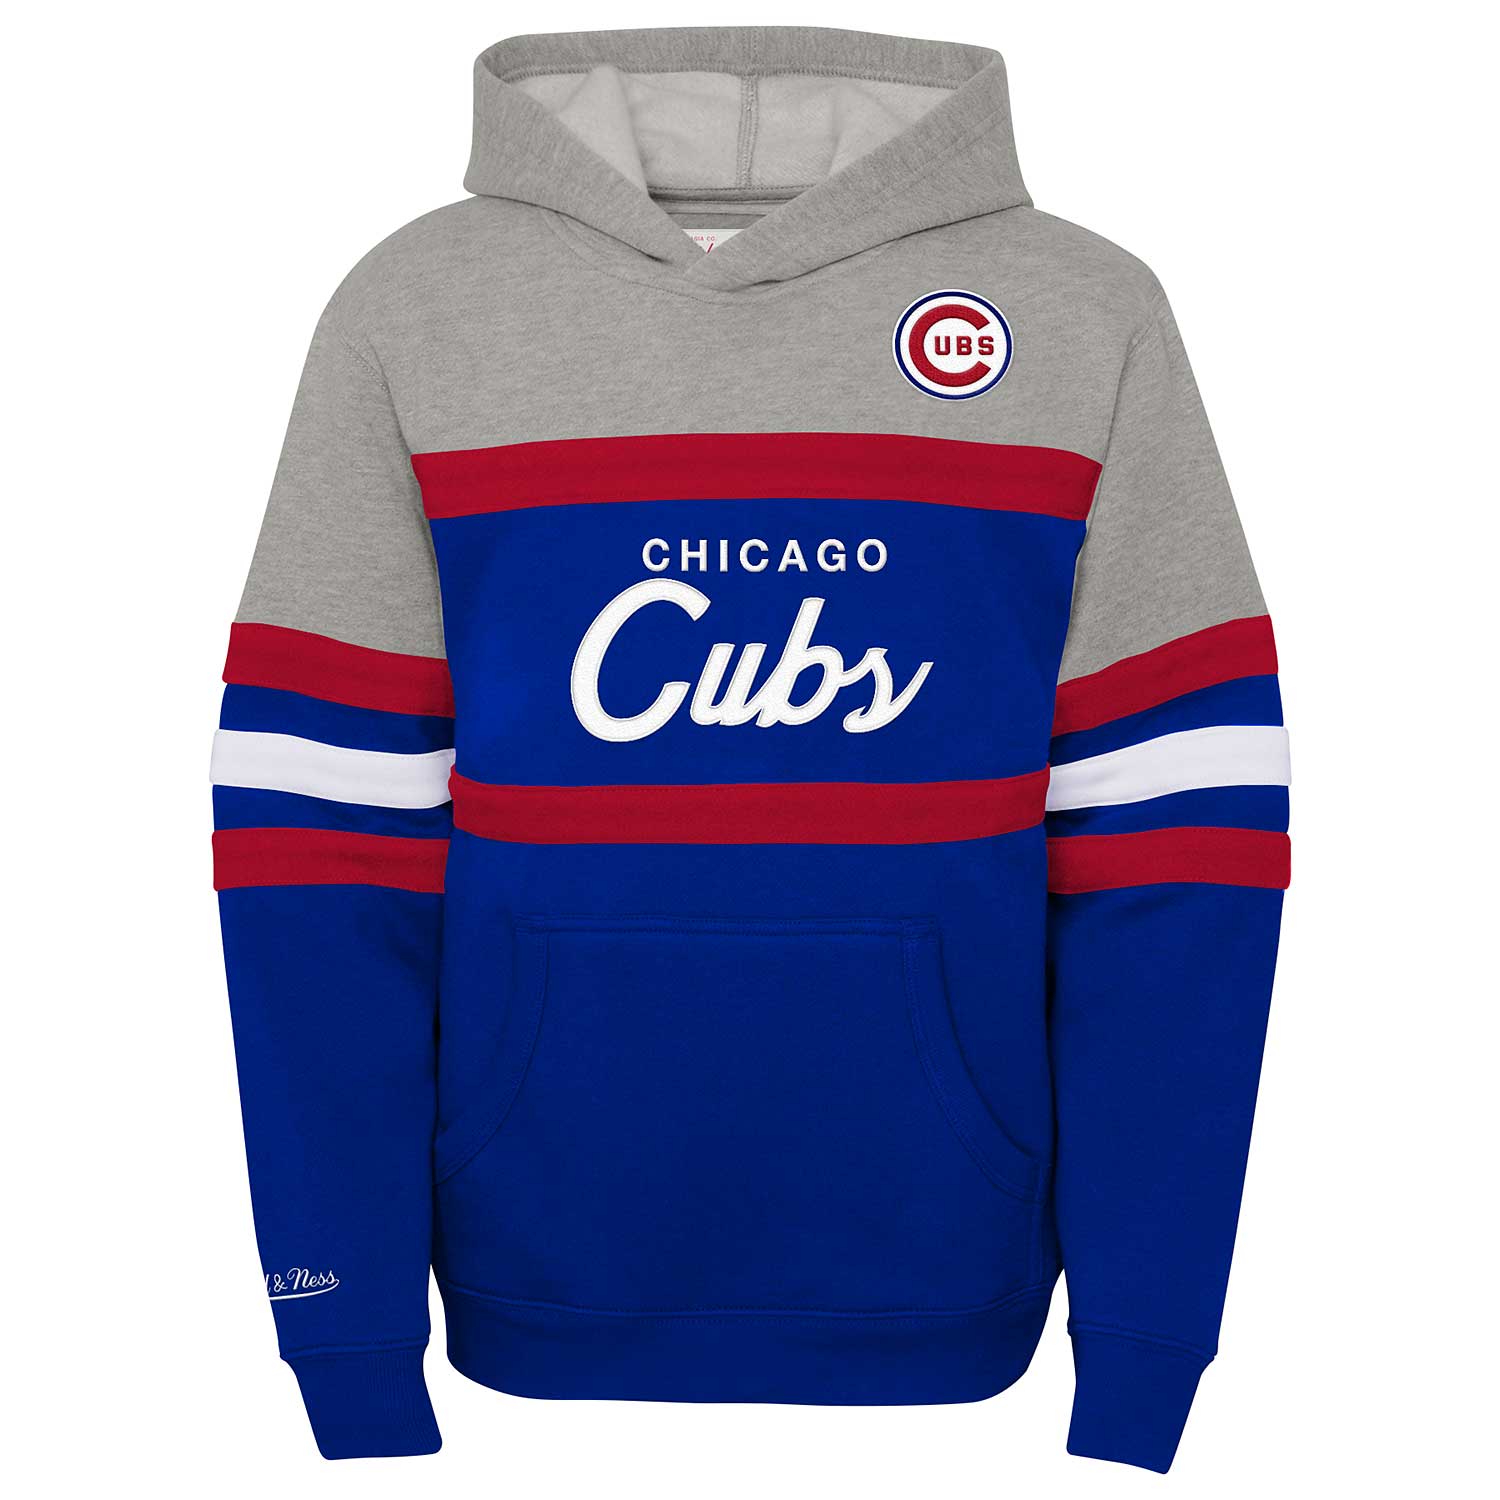 Chicago Cubs Youth Head Coach Hooded Sweatshirt Medium = 10-12